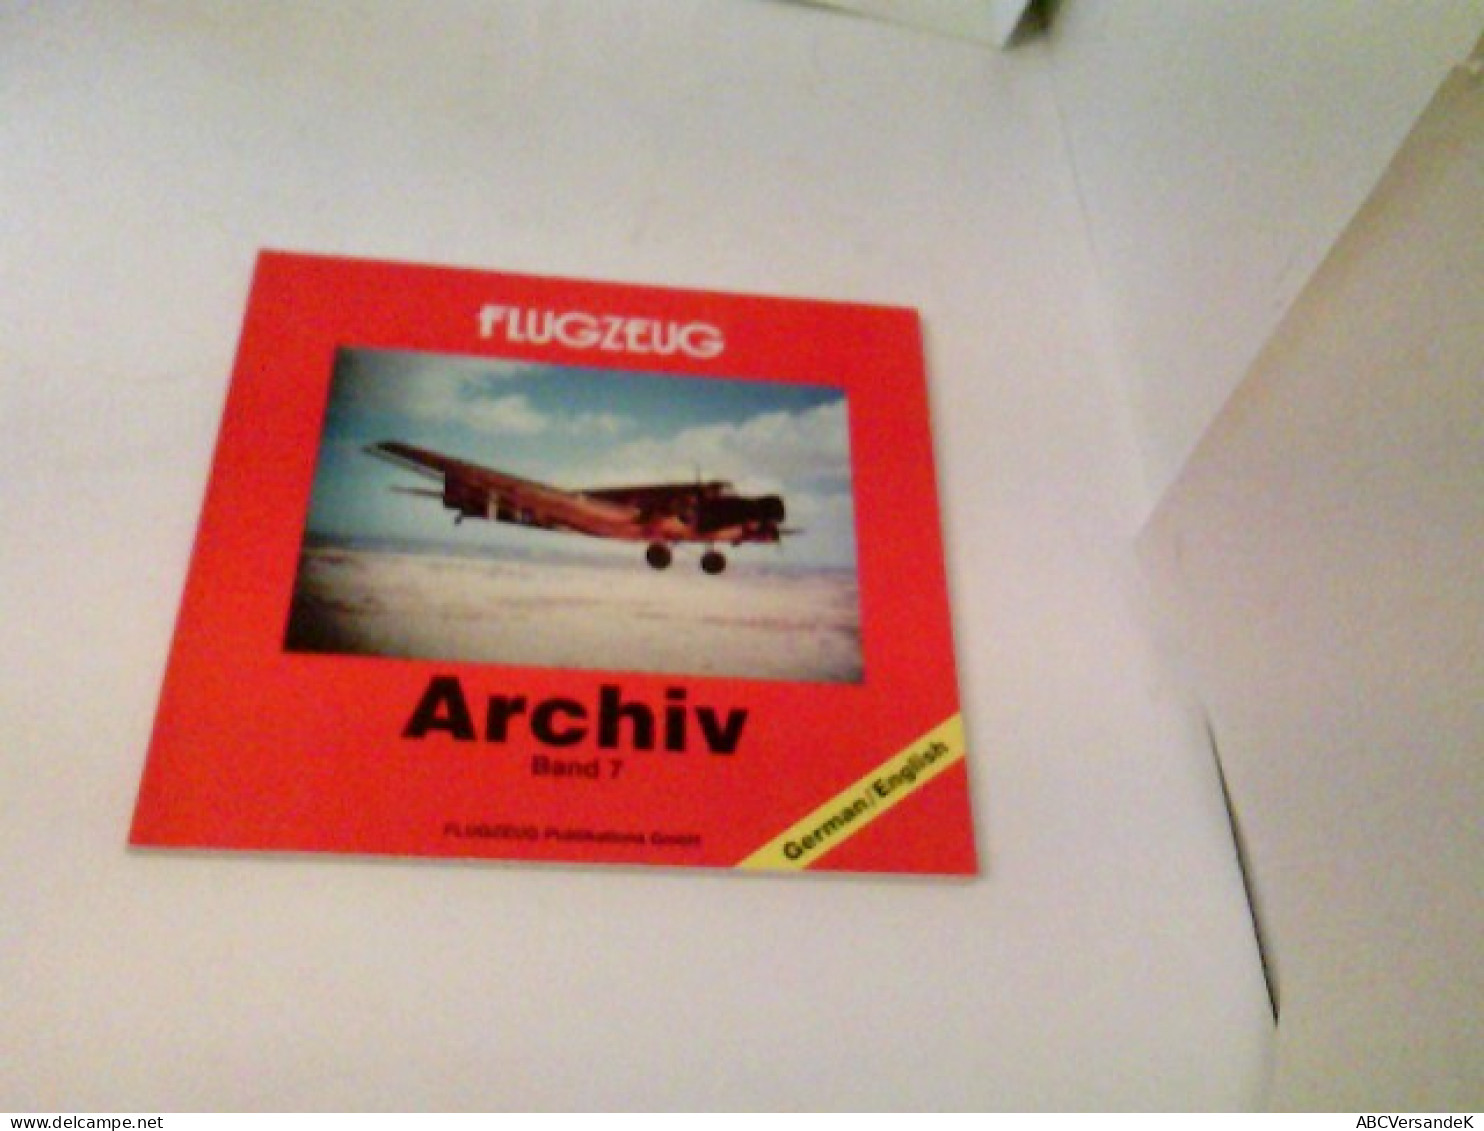 Flugzeug Archiv Band 7 - Verkehr